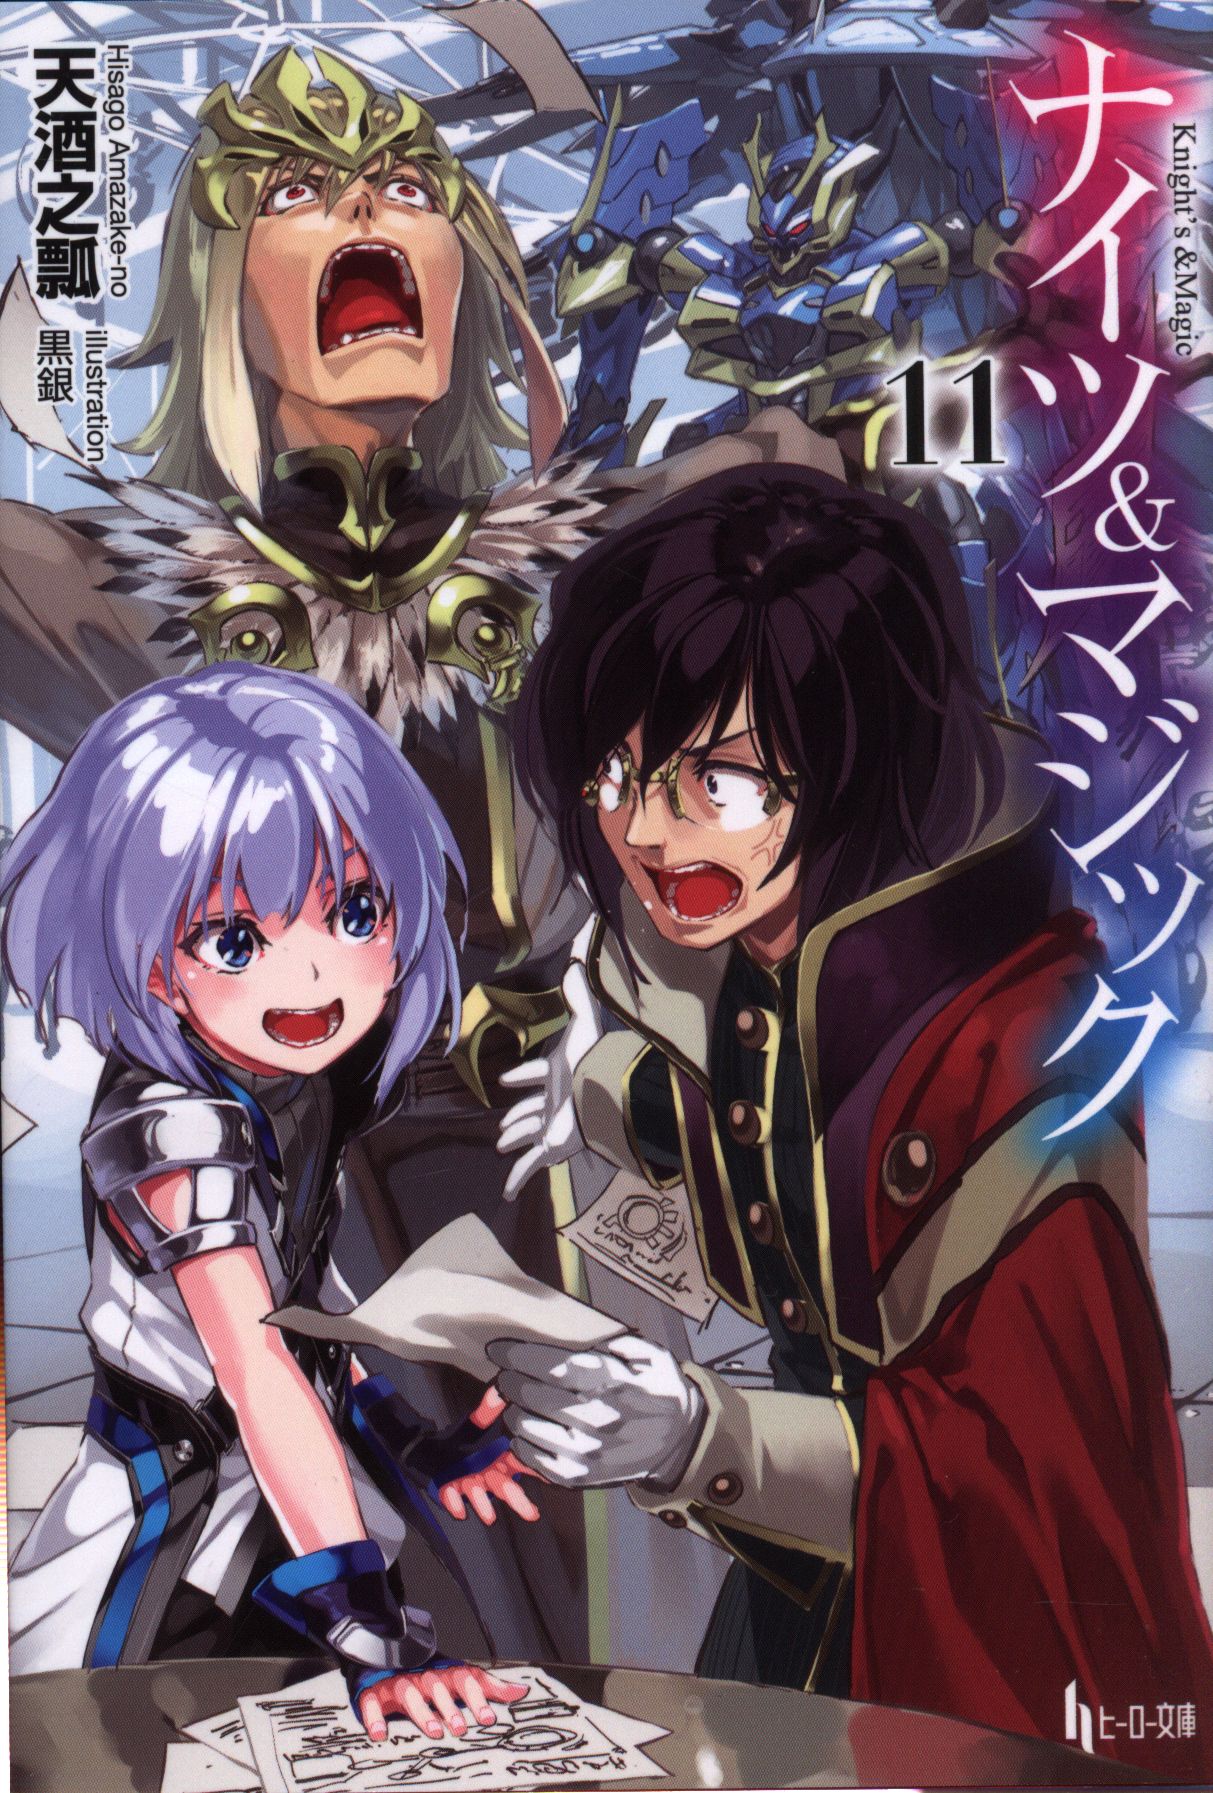 Light Novel Thursday: Knights and Magic by Amazake No Hisago